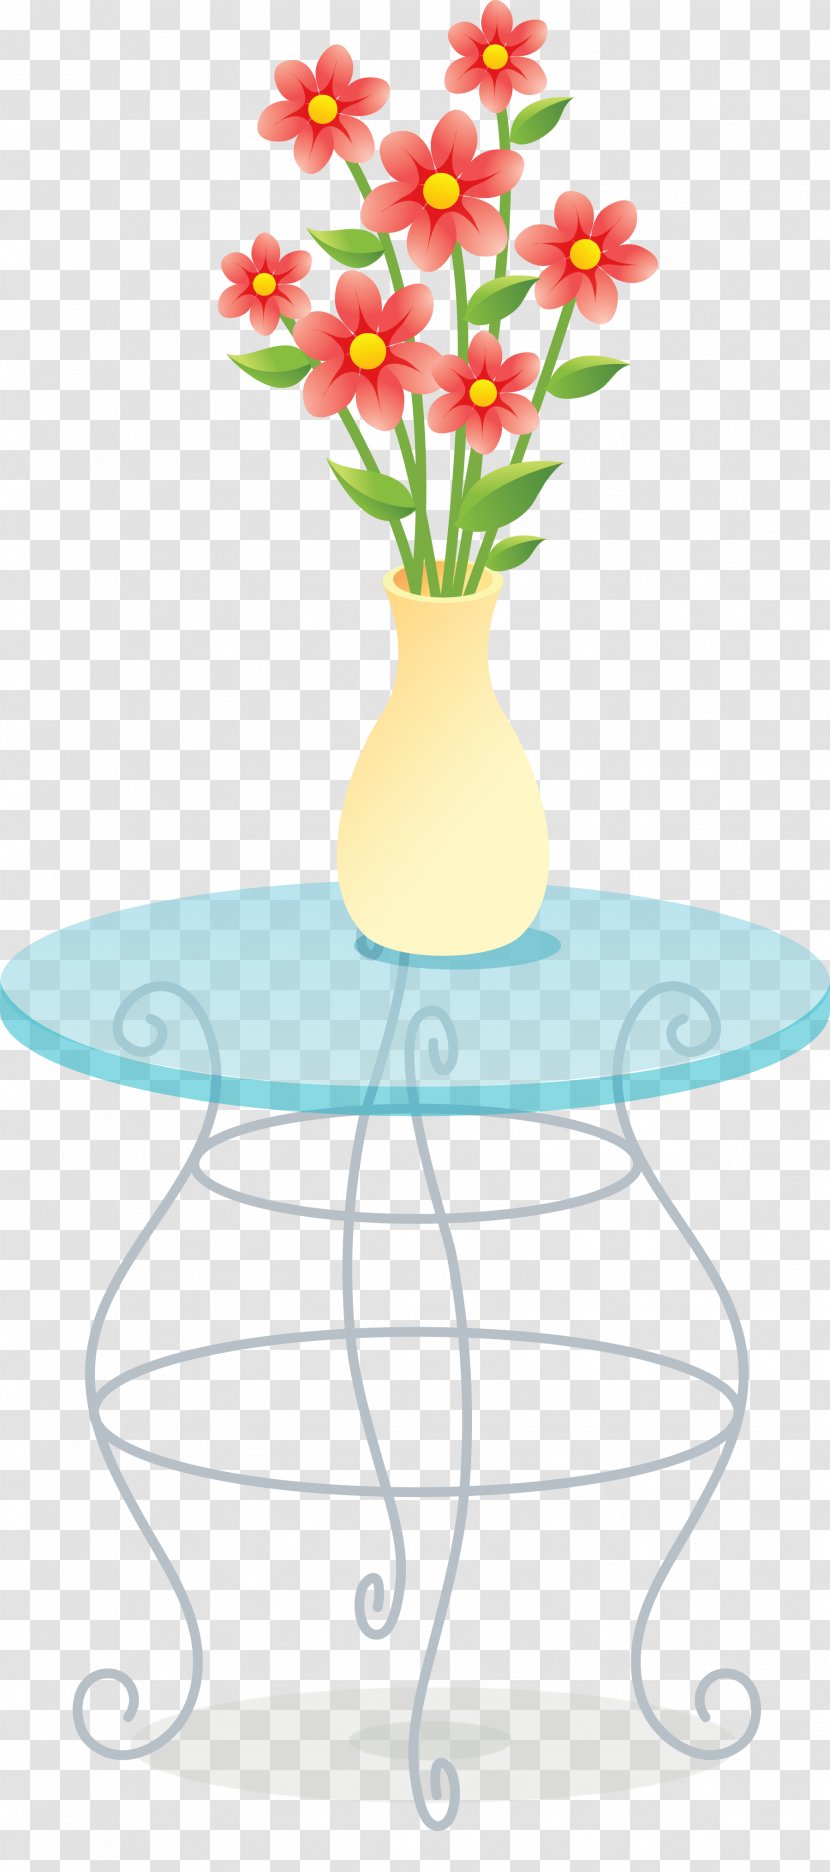 Clip Art Vase Image - Microsoft Office - Flower Silhouette Transparent PNG